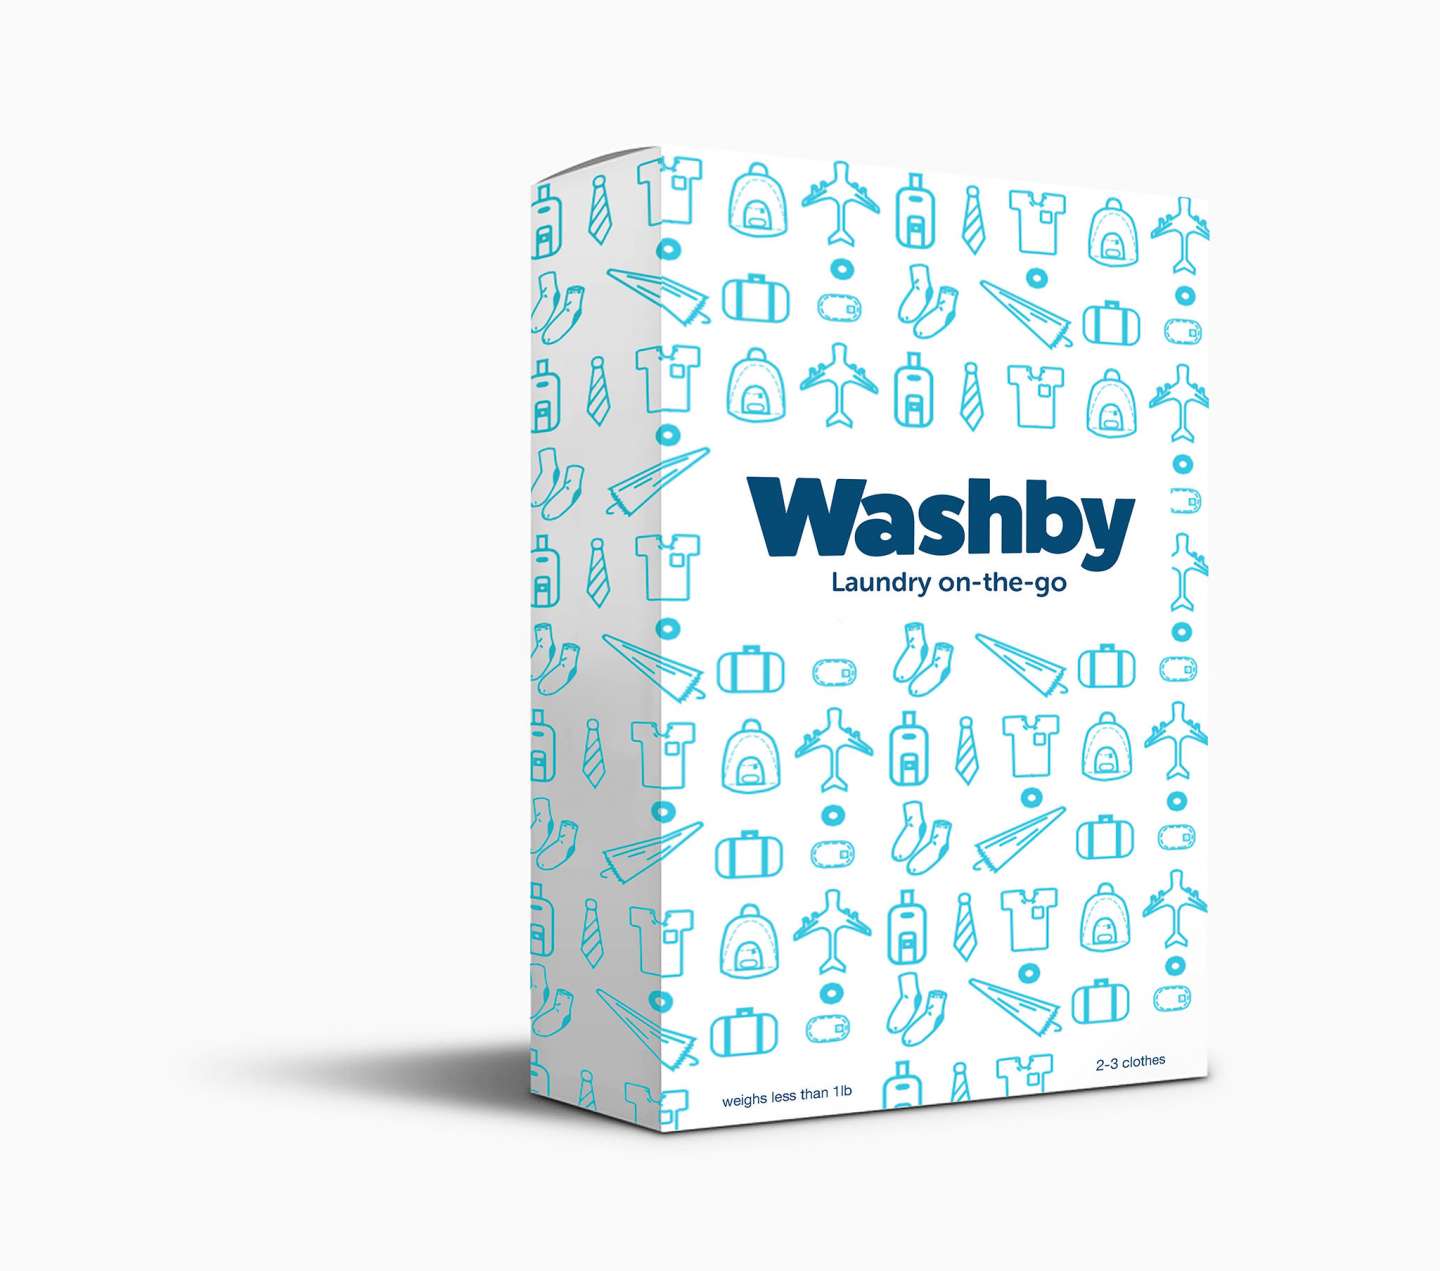 Washby